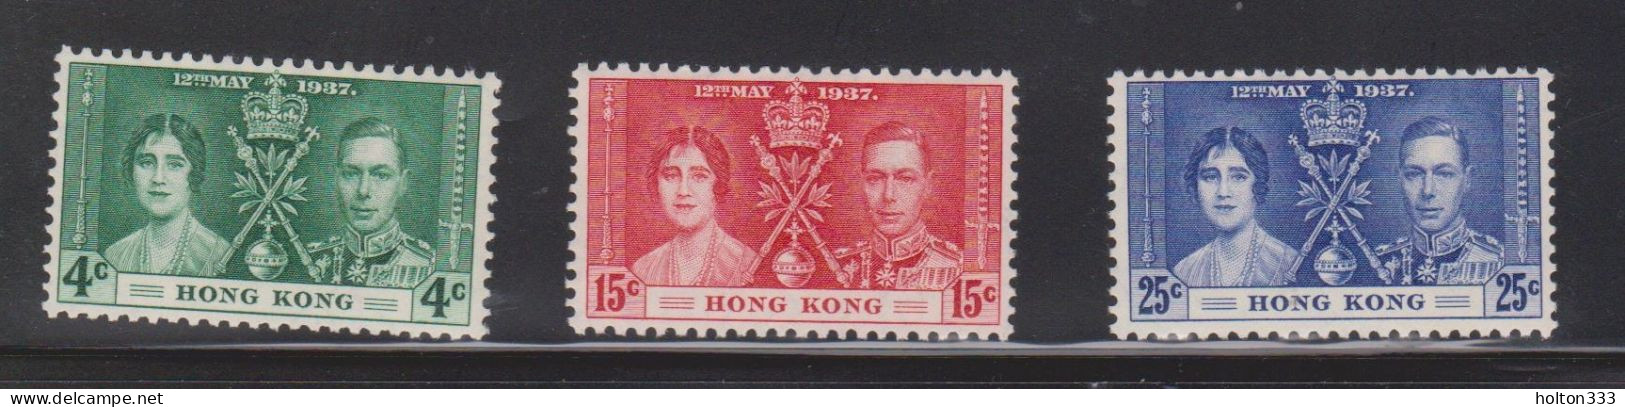 HONG KONG Scott # 151-3 MH - King George VI Coronation Set - Unused Stamps